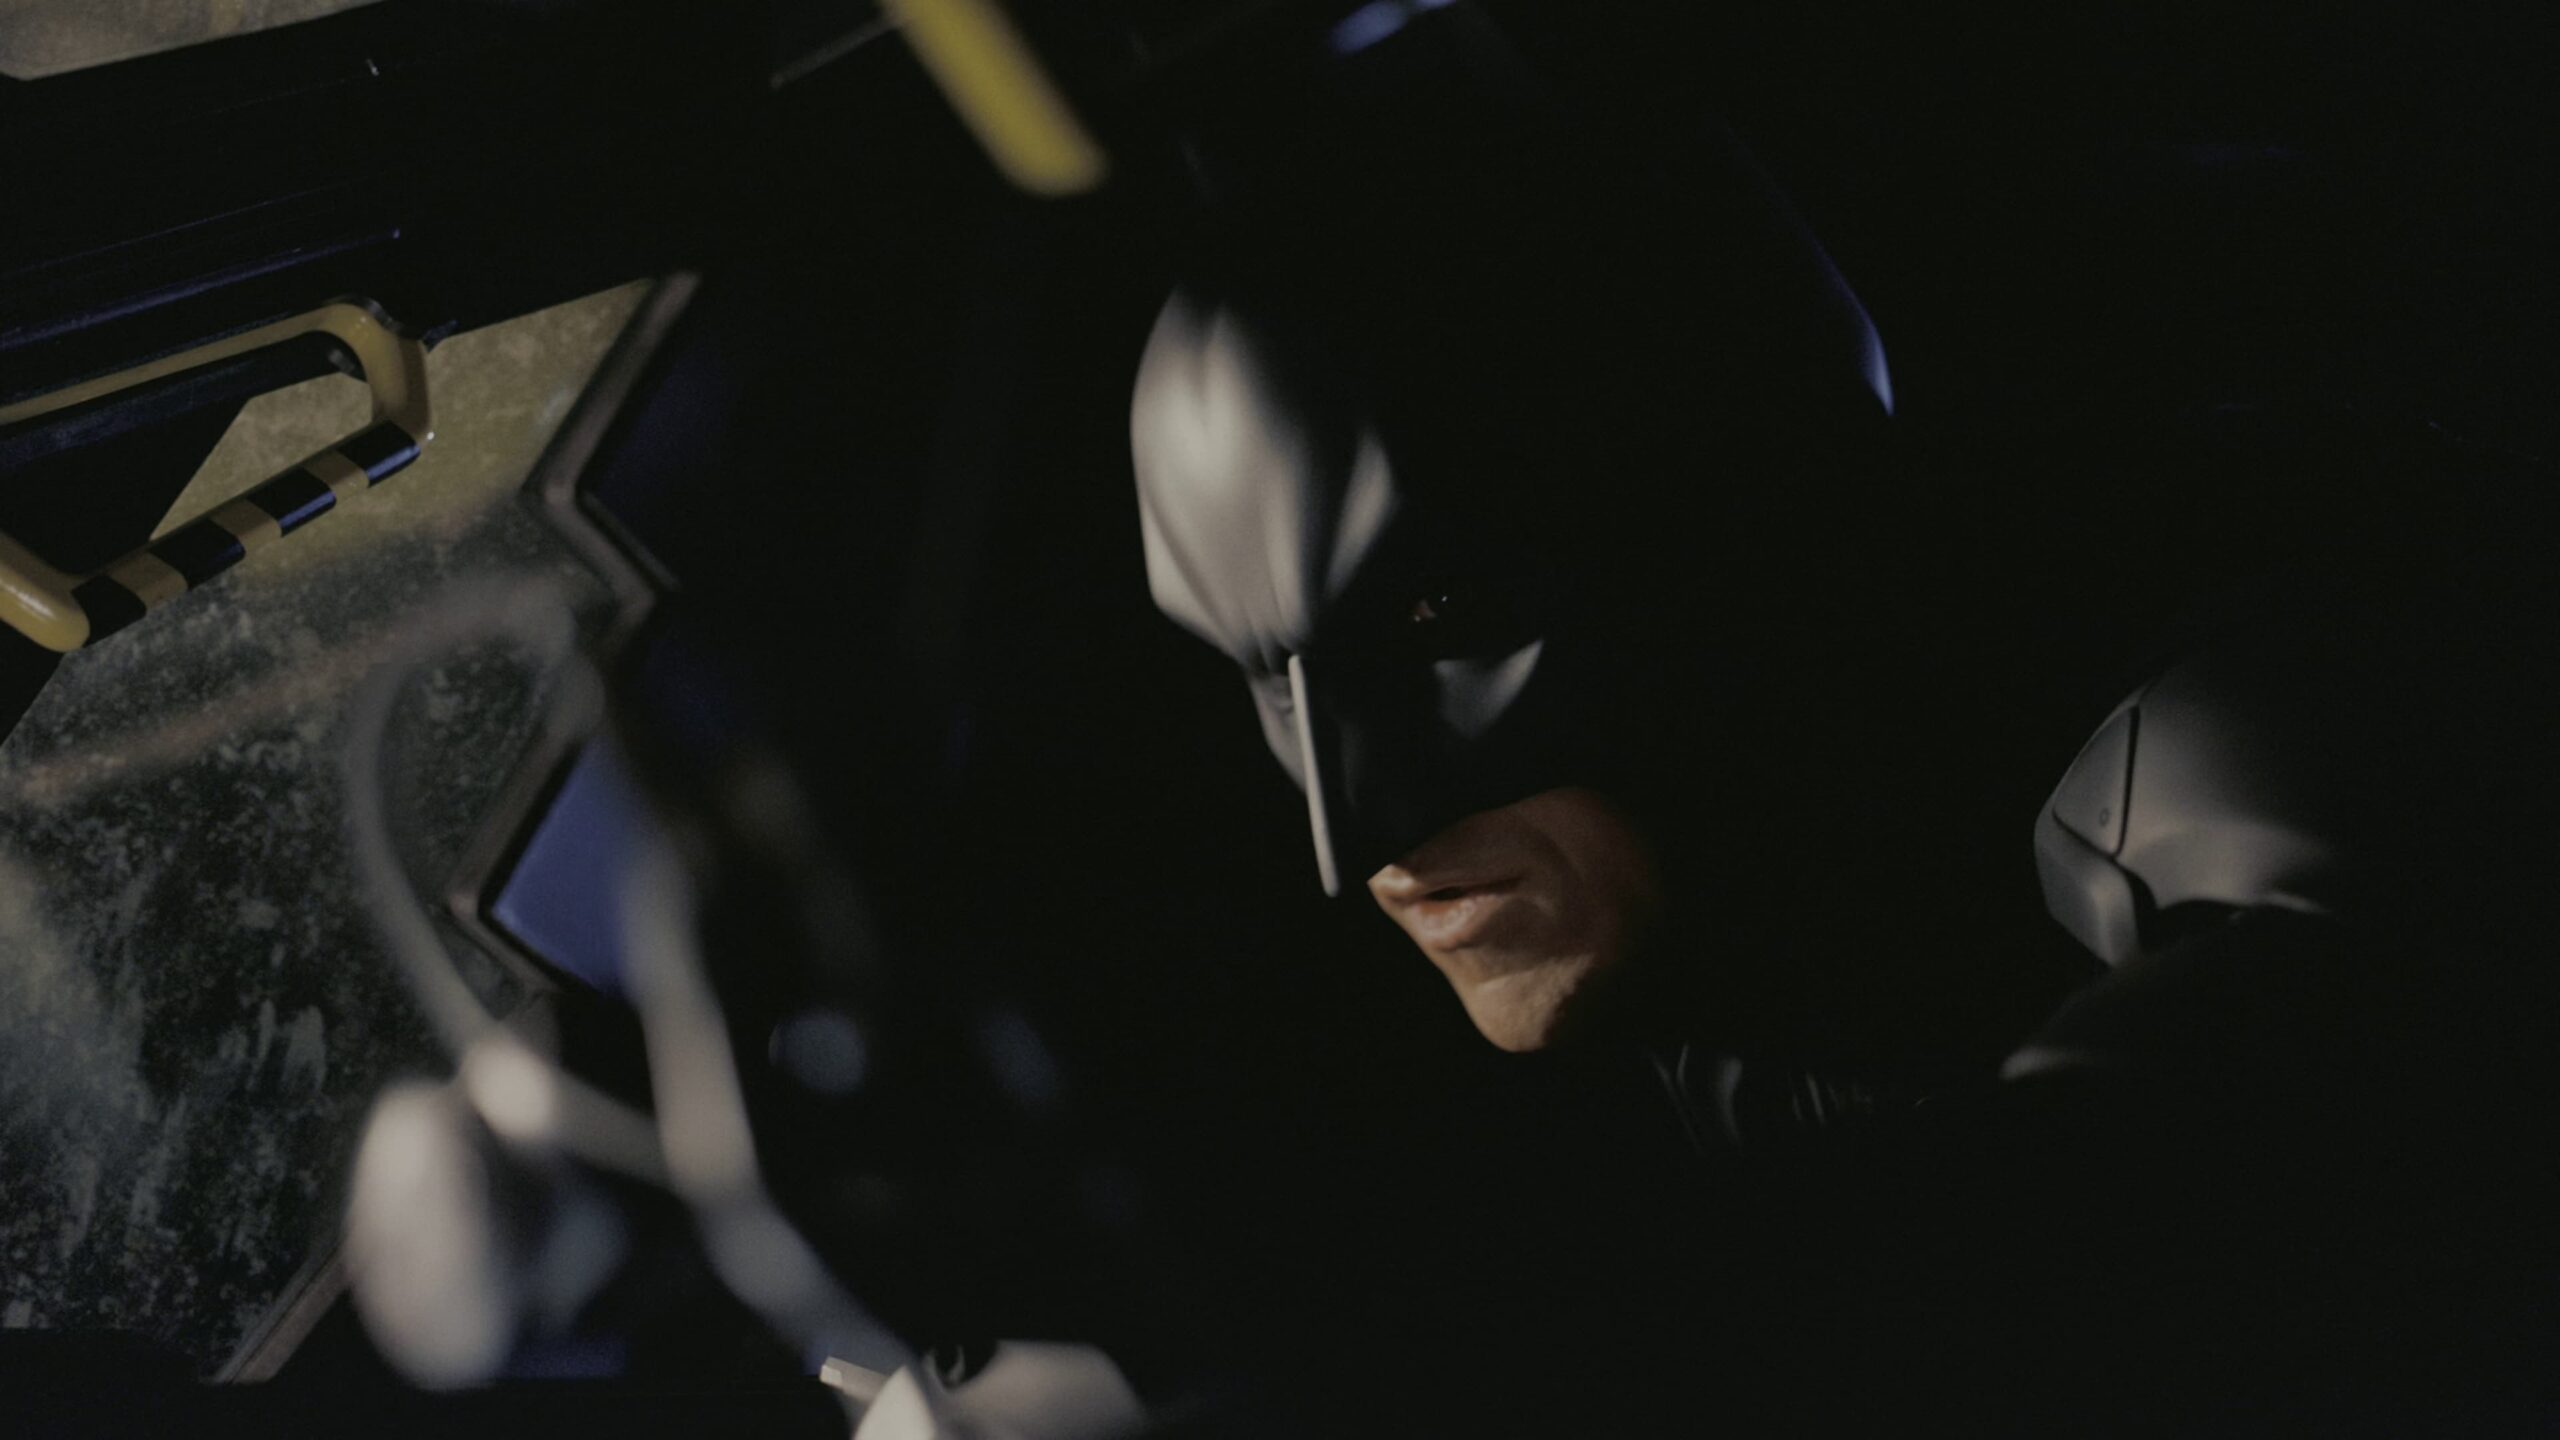 The Batman Costume and Mask